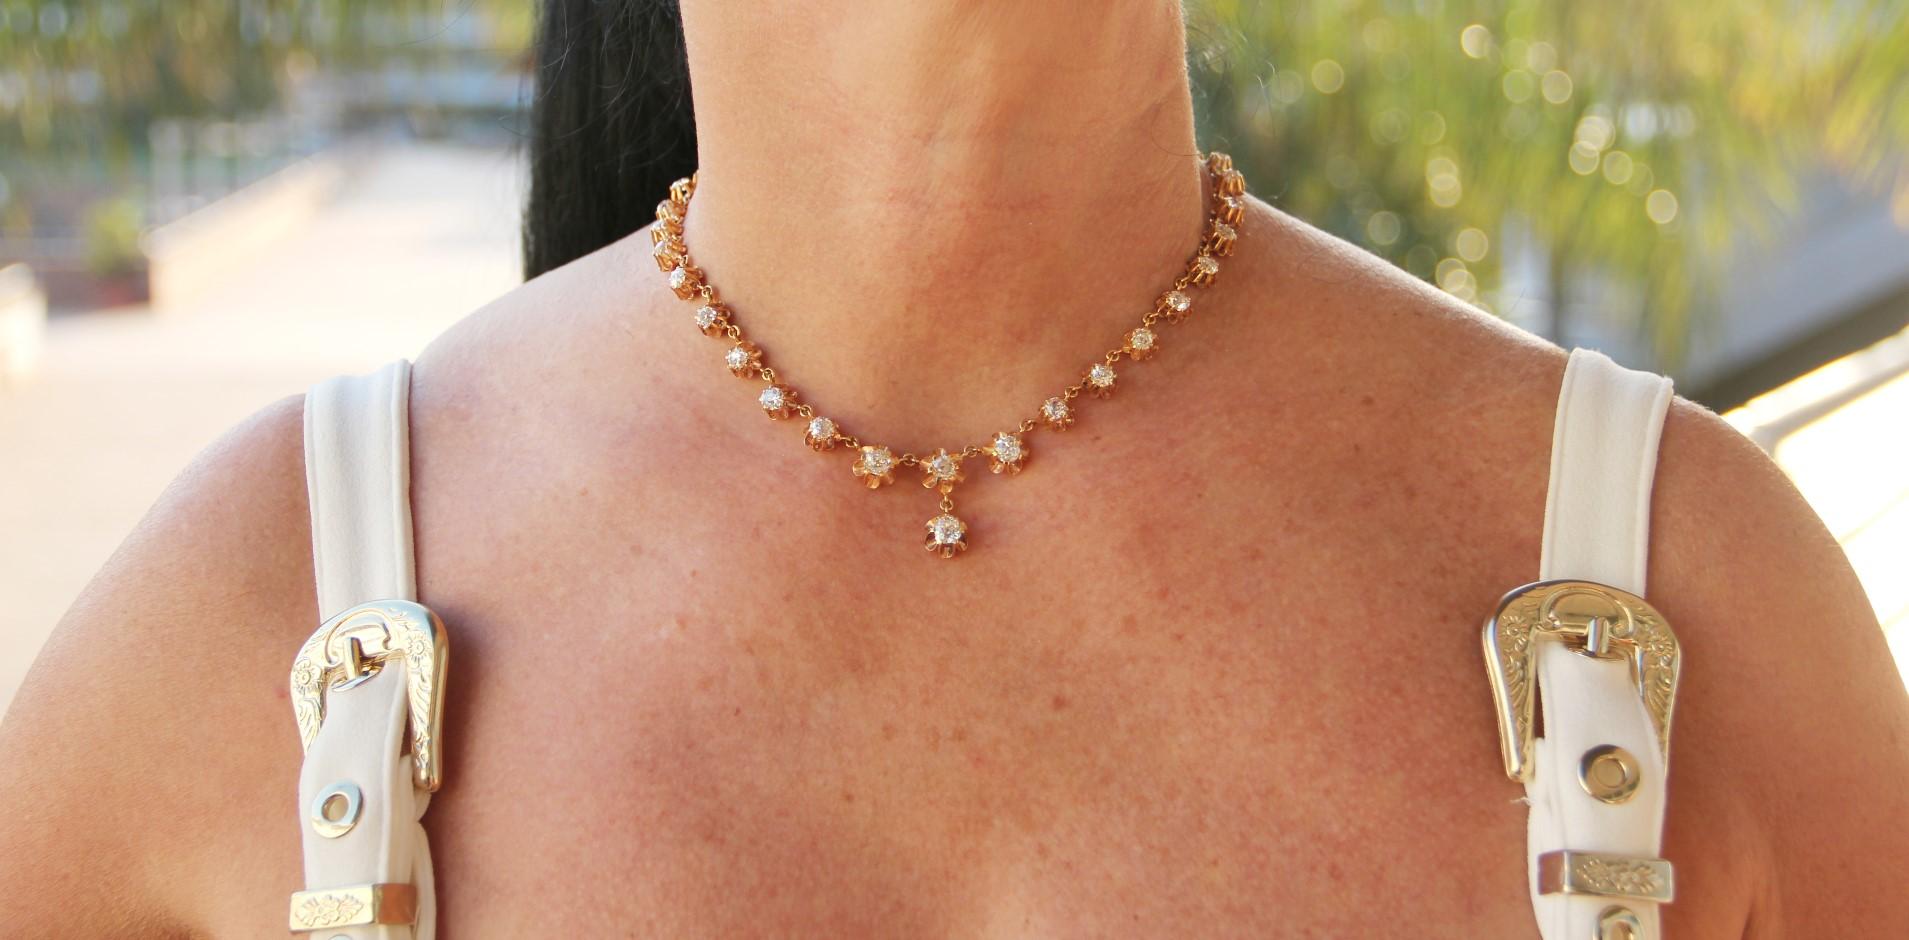 diamond choker necklace tanishq